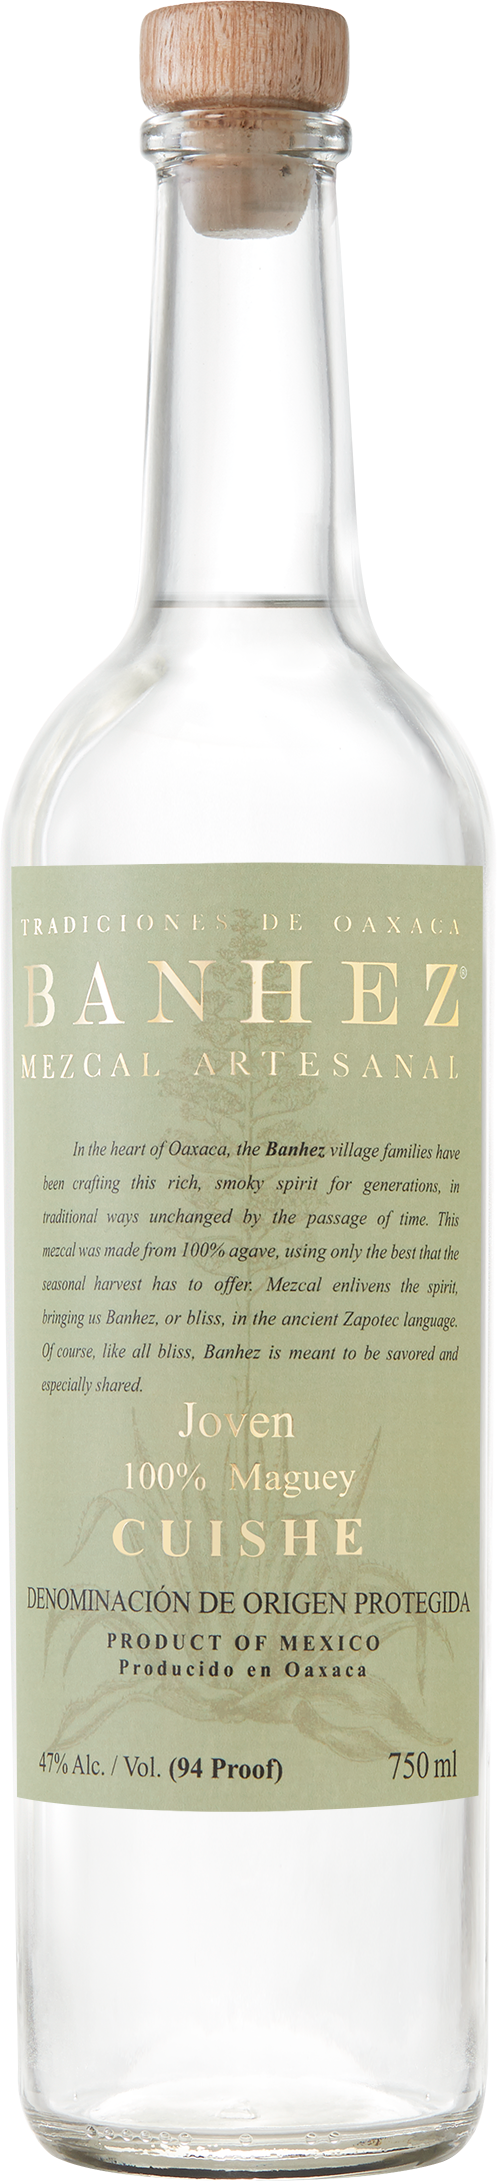 BANHEZ MEZCAL JOVEN CUISHE Mezcal BeverageWarehouse